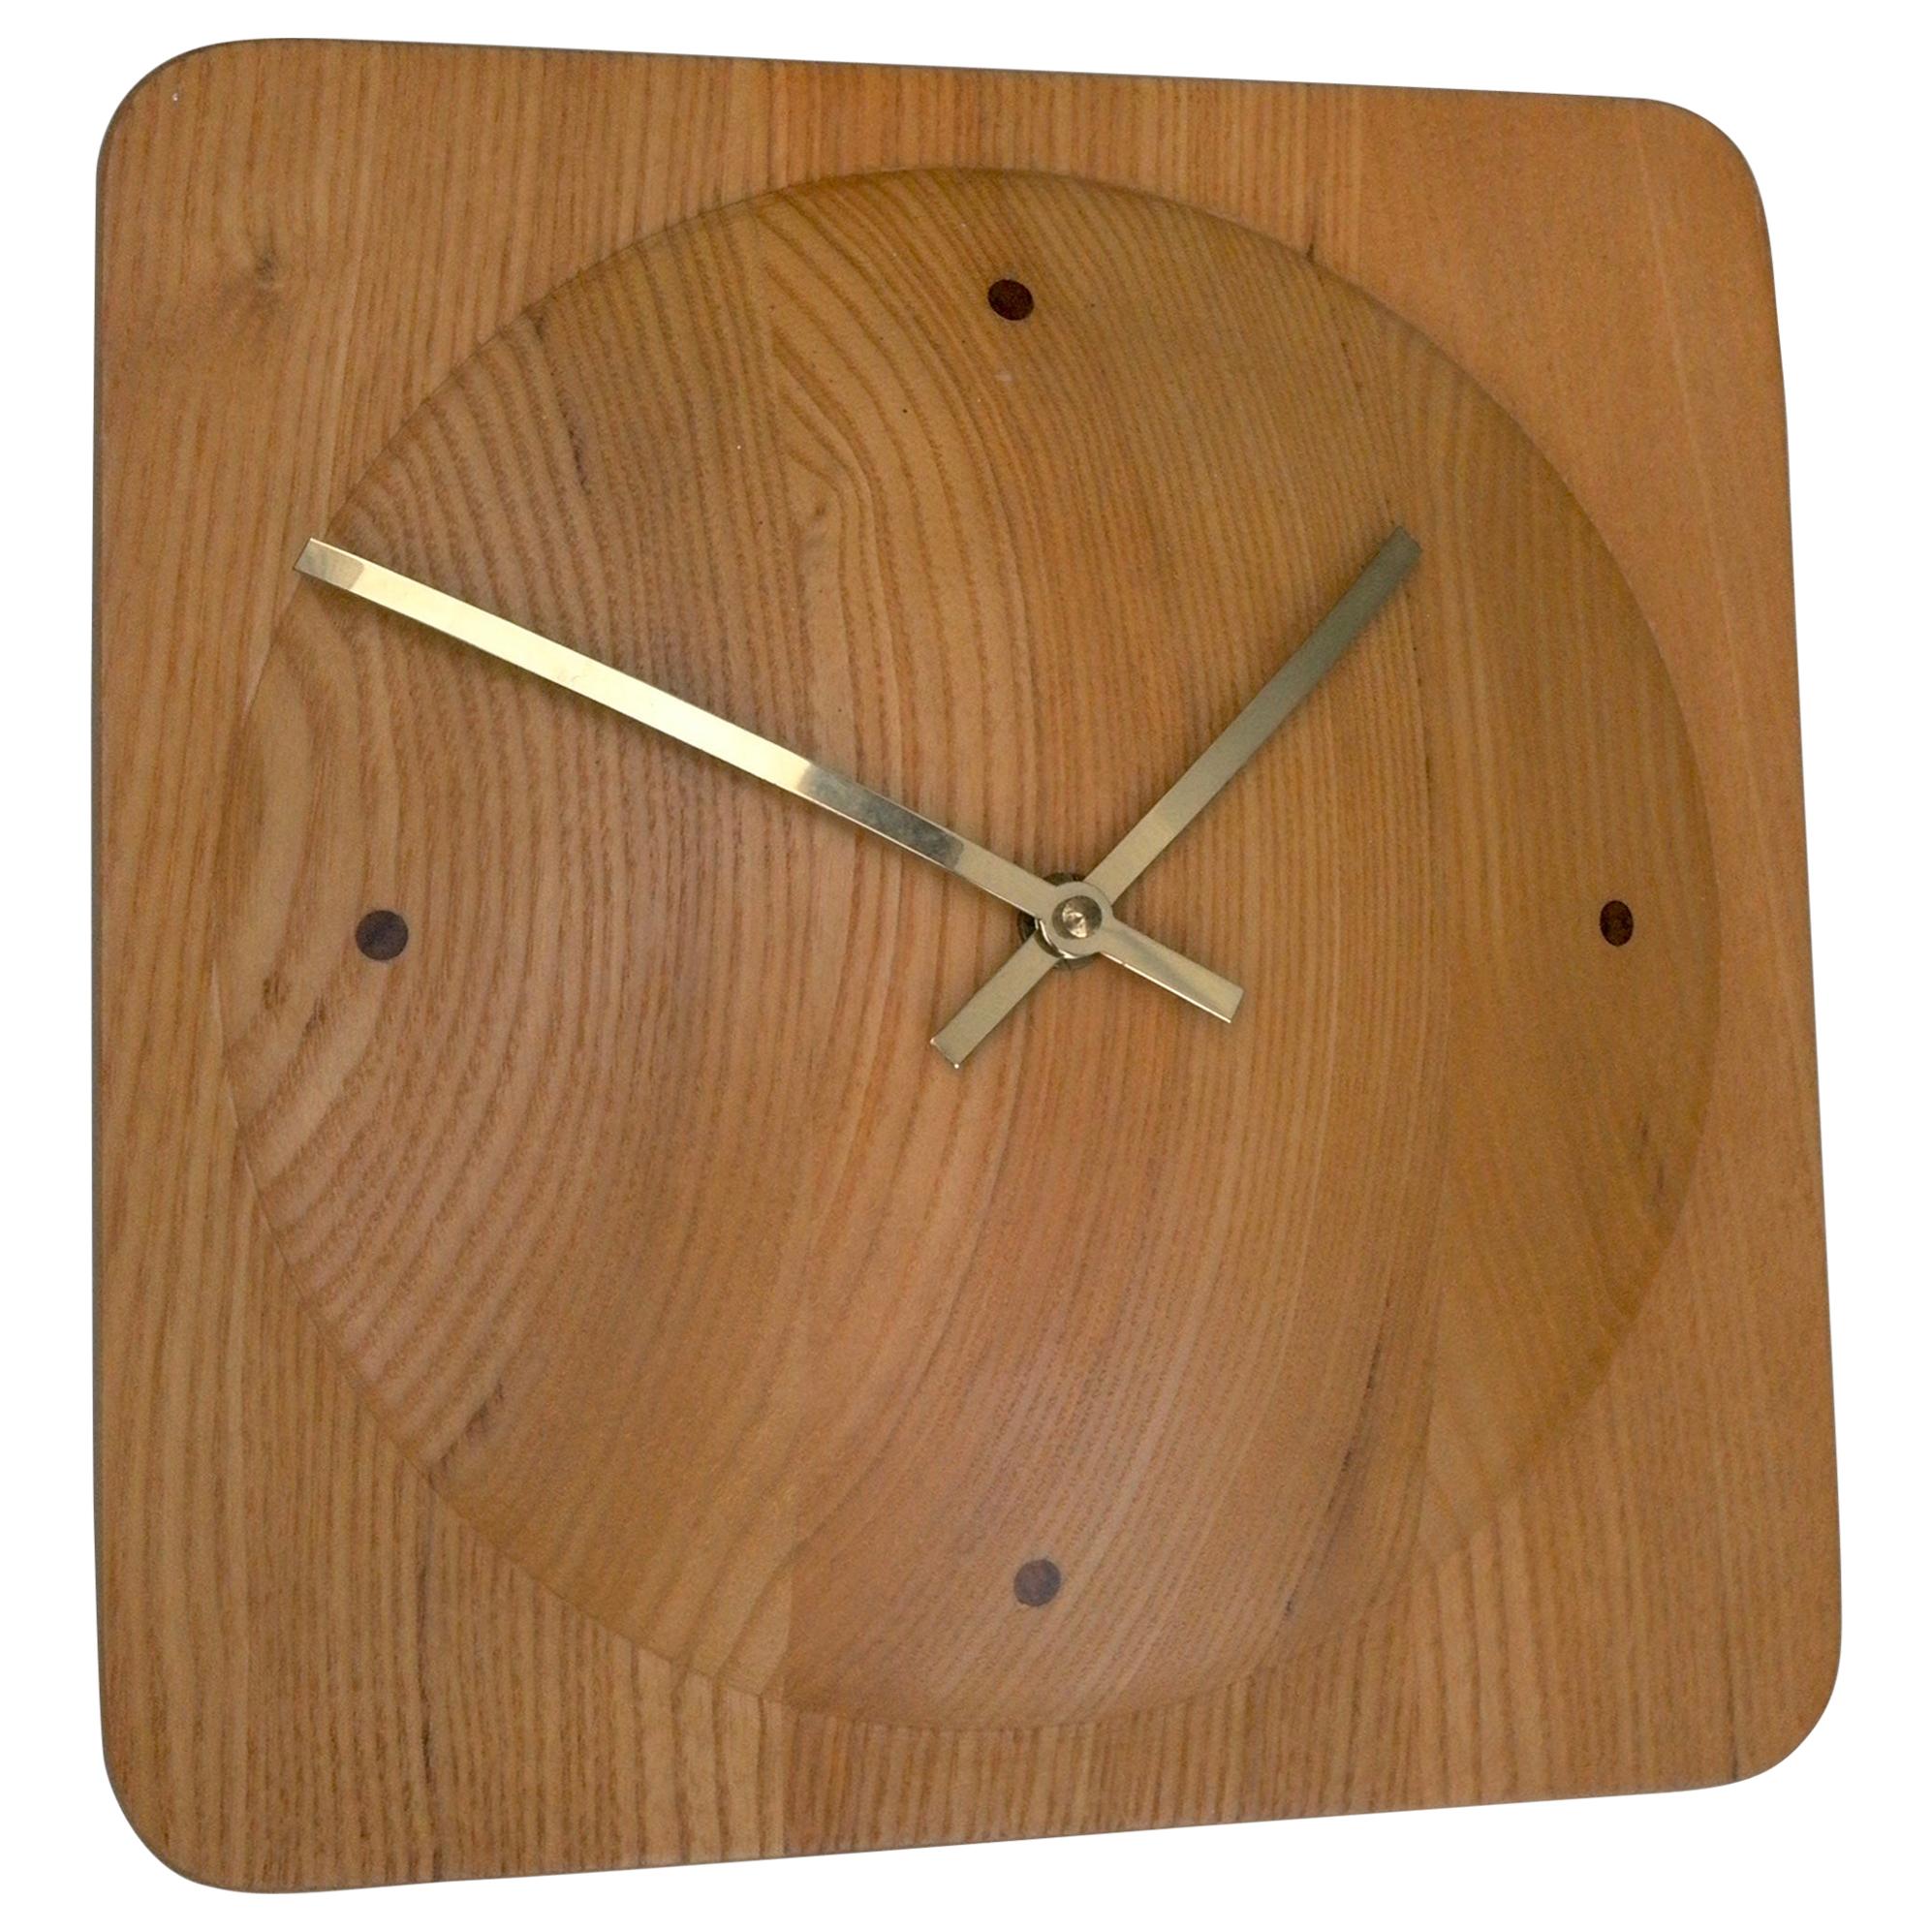 Danish Mid-Century Modern Pine and Brass Wall Clock